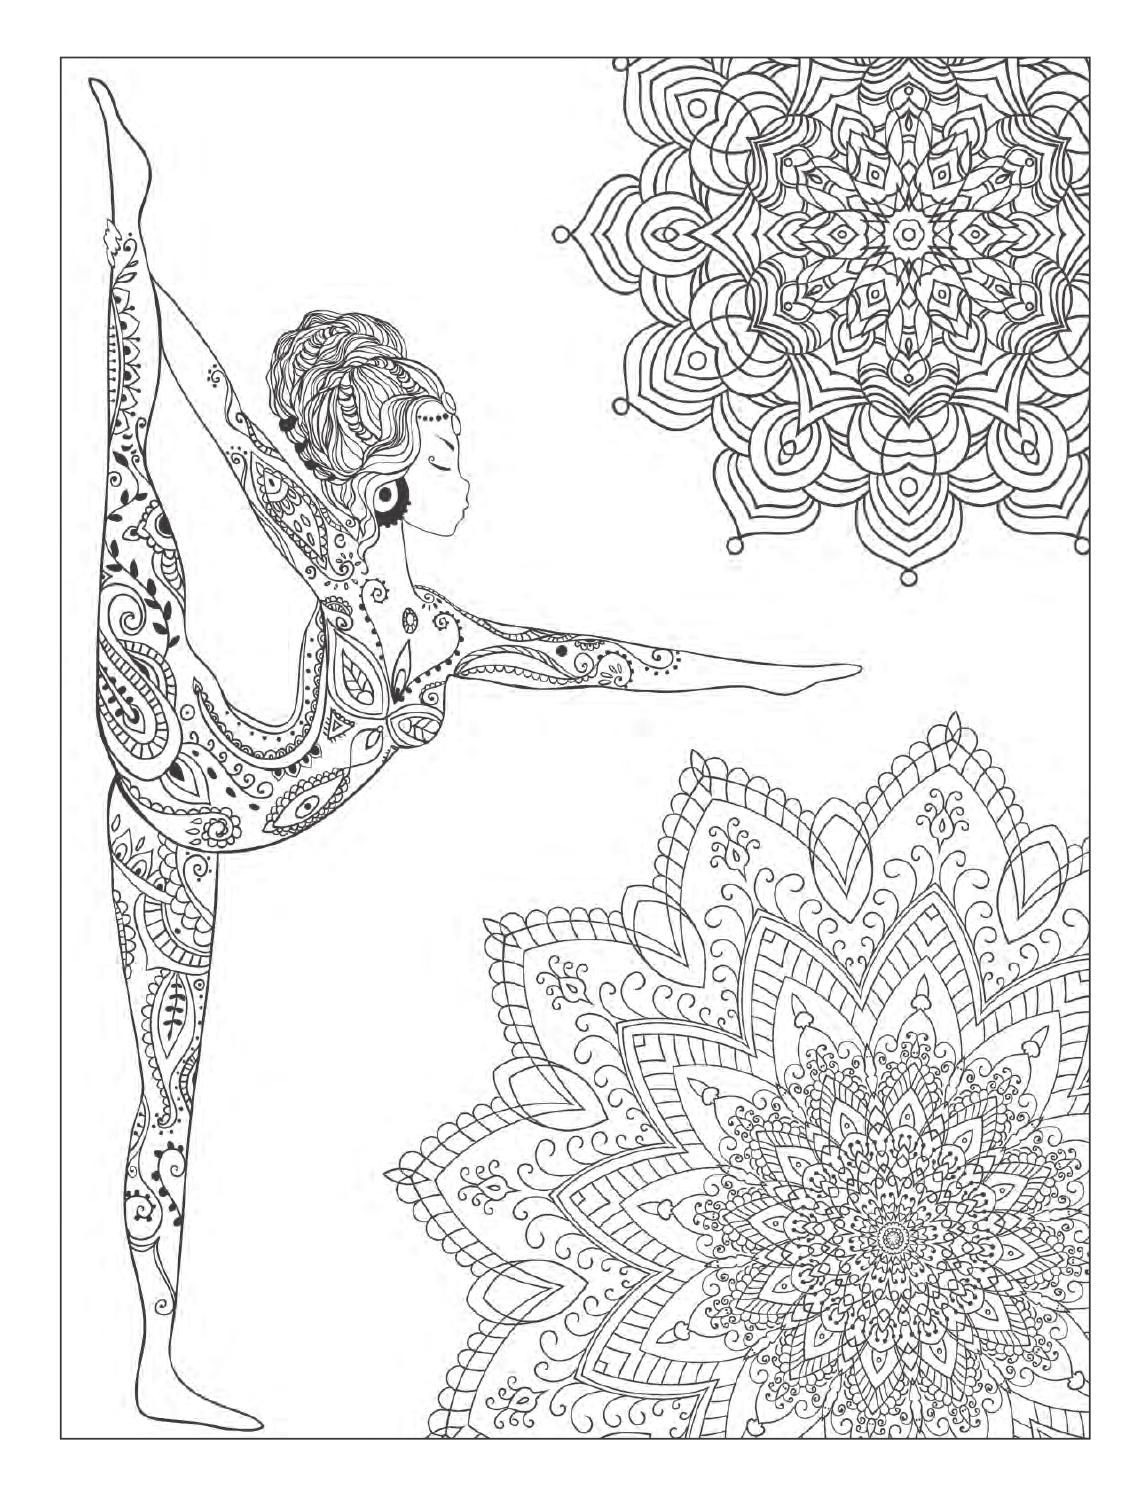 Yoga and meditation coloring book for adults: With Yoga Poses and Mandalas  | Mandala coloring pages, Mandala coloring, Designs coloring books